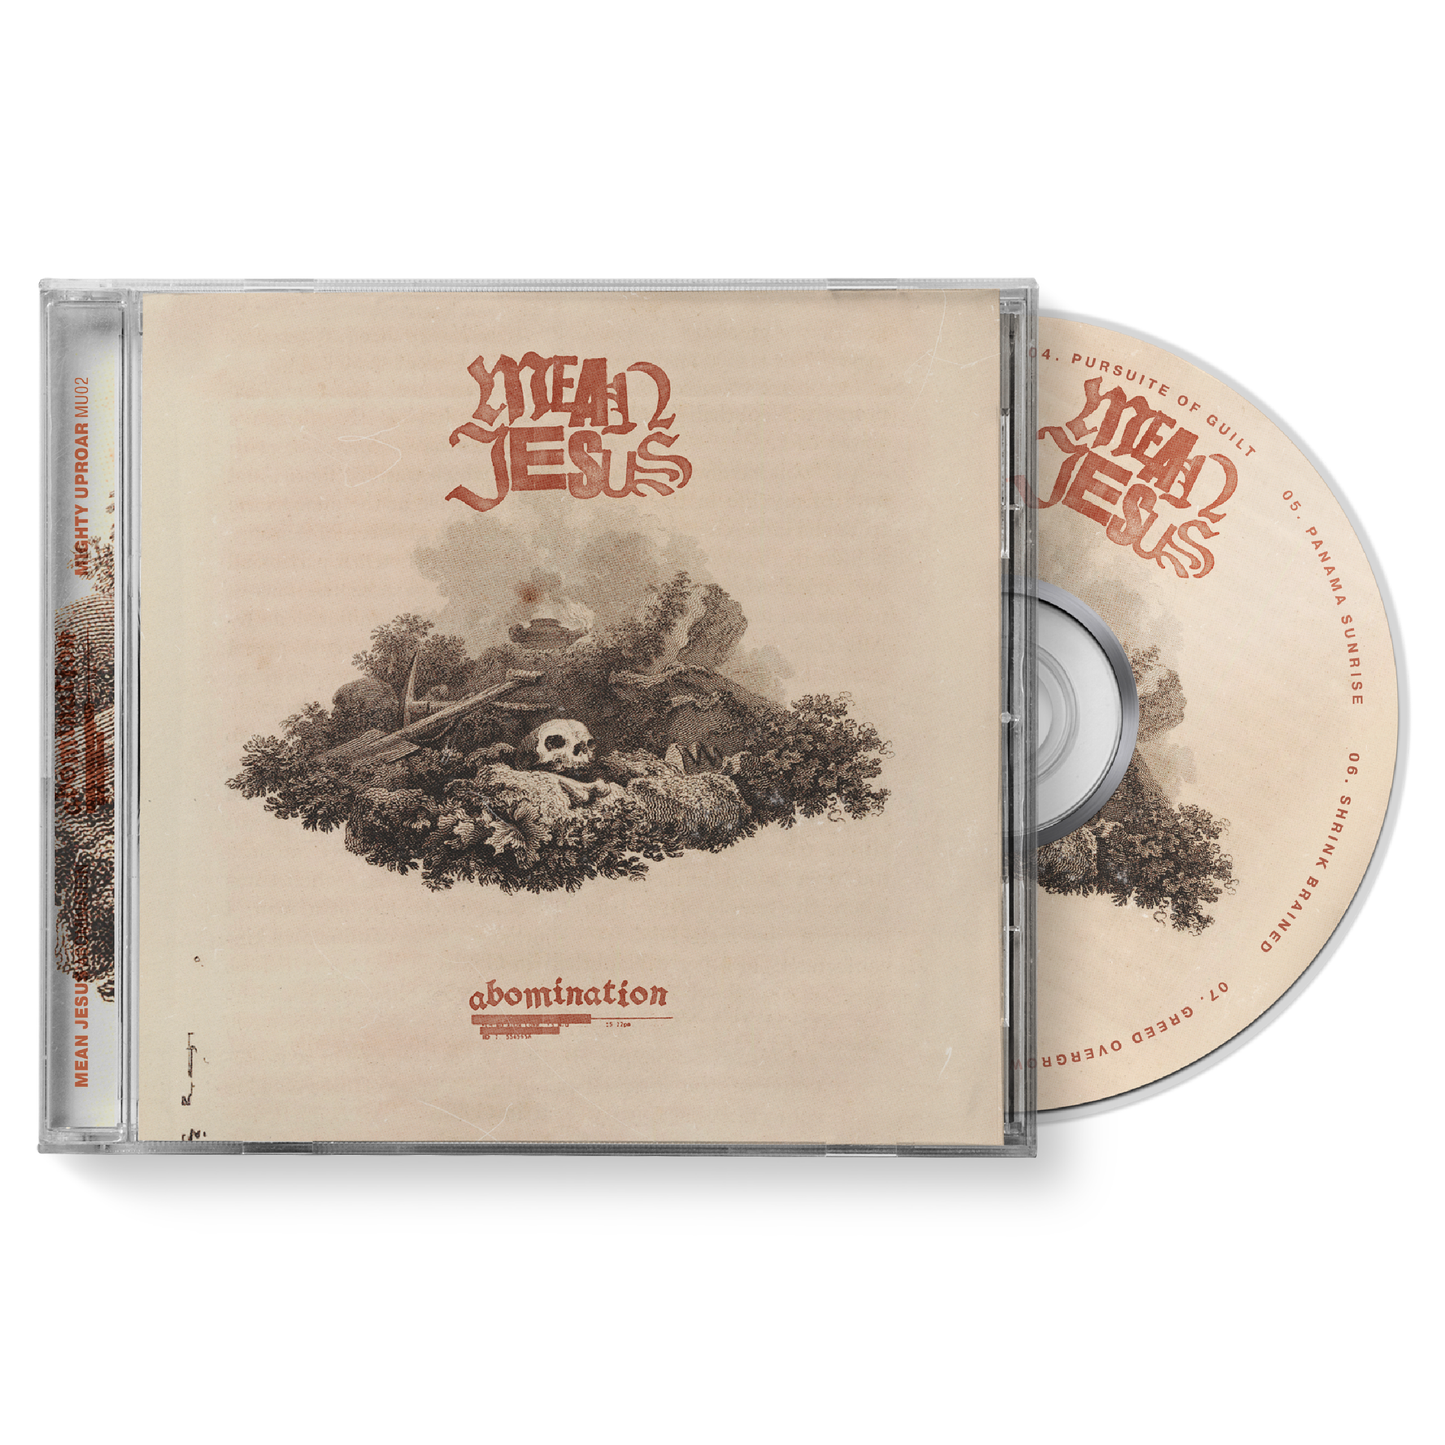 MEAN JESUS "Abomination" CD